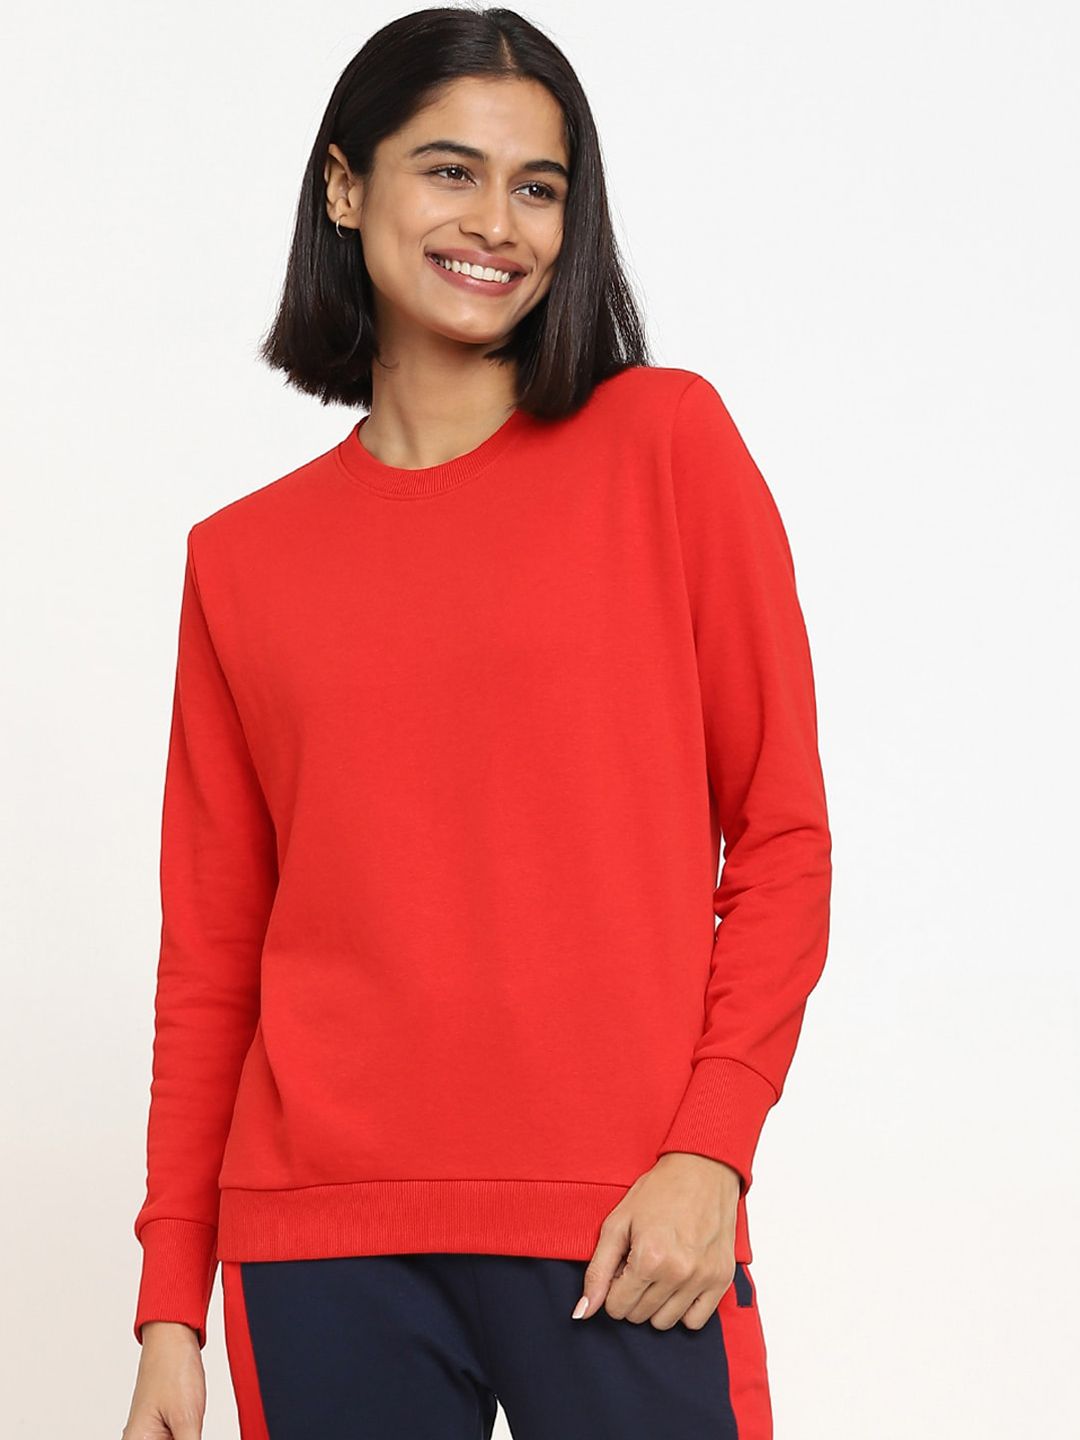 Bewakoof Women Red Sweatshirt Price in India